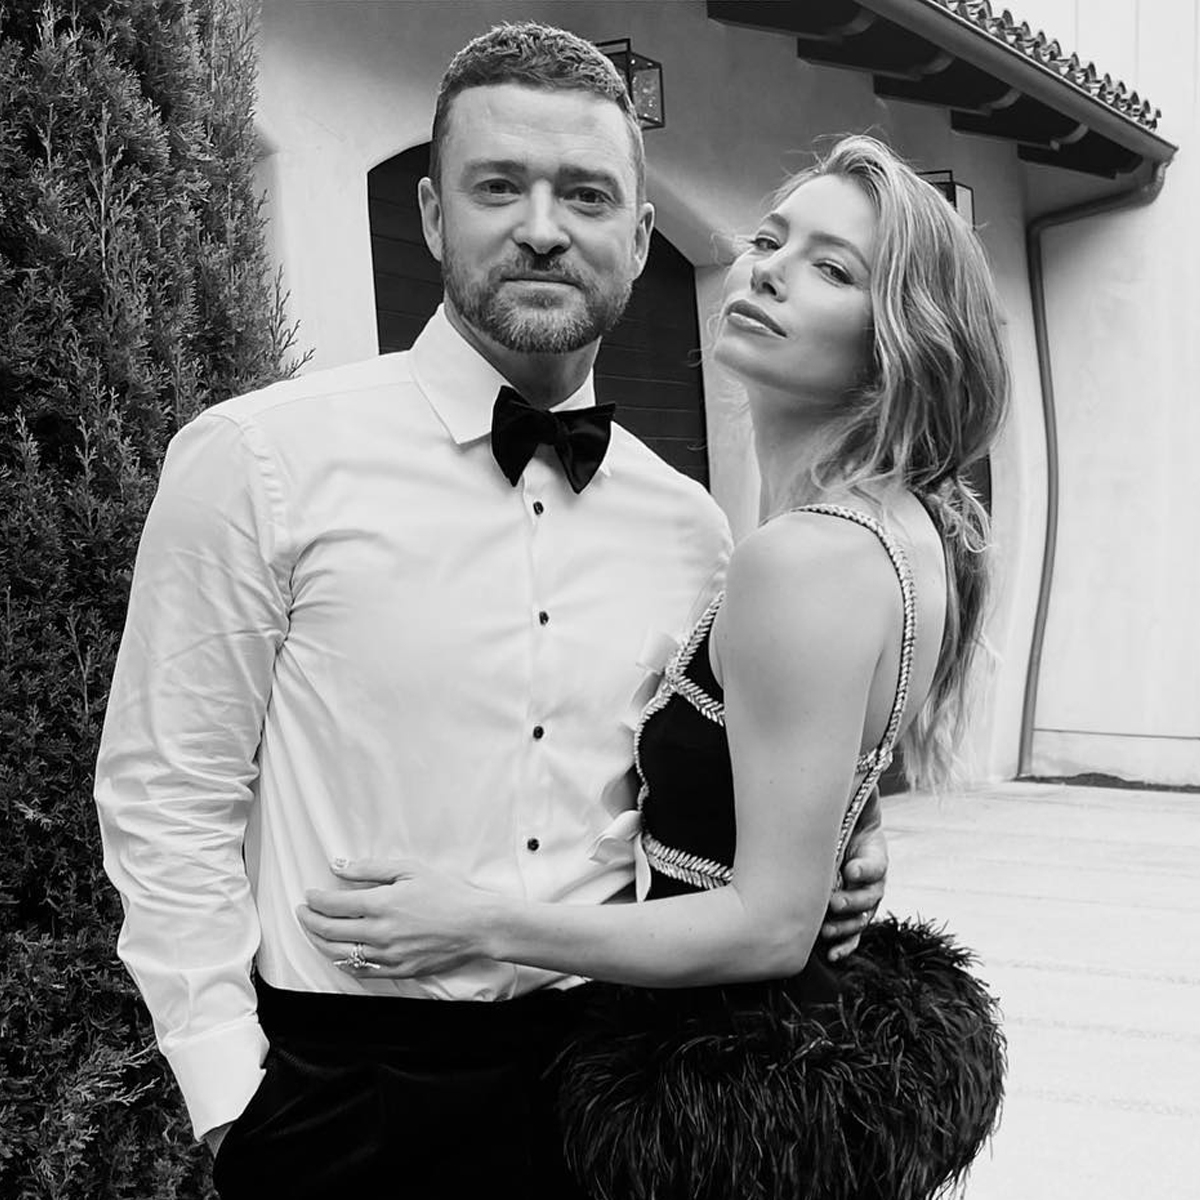 Jessica Biel-Justin Timberlake want more kids